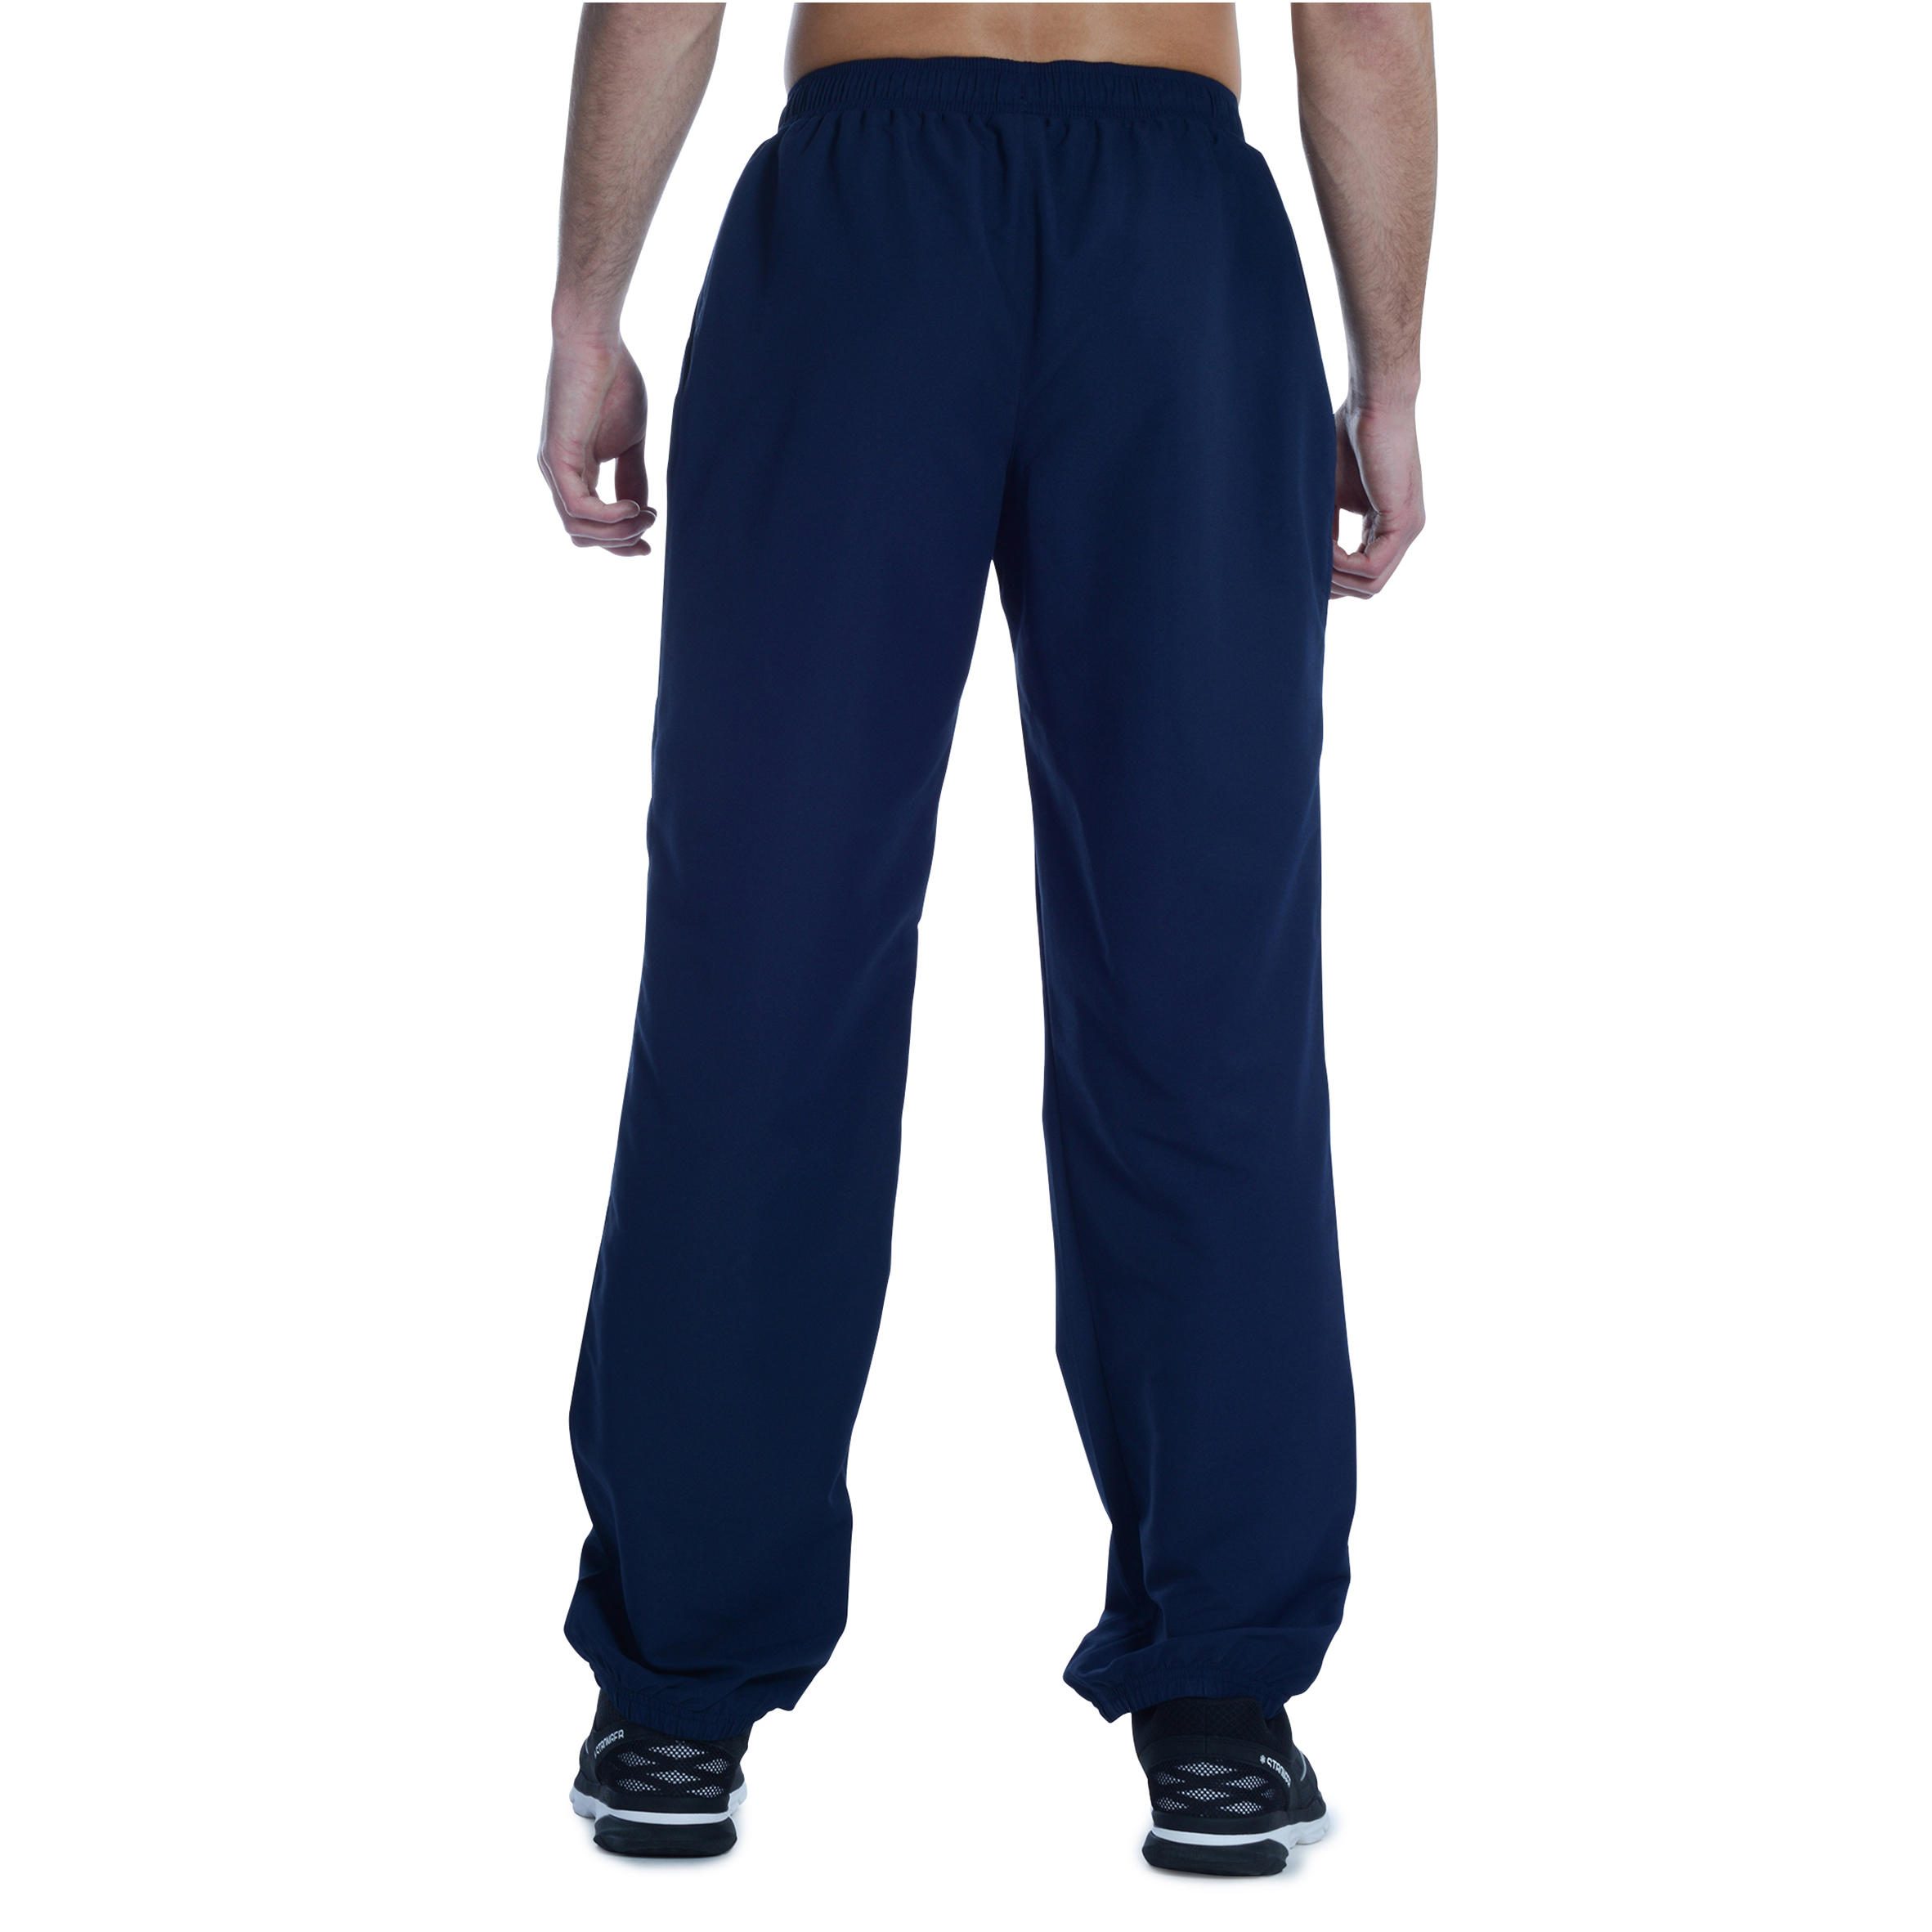 Men's Non-Stretchable Tracksuit Pant - Navy Blue - DecathlonB2B